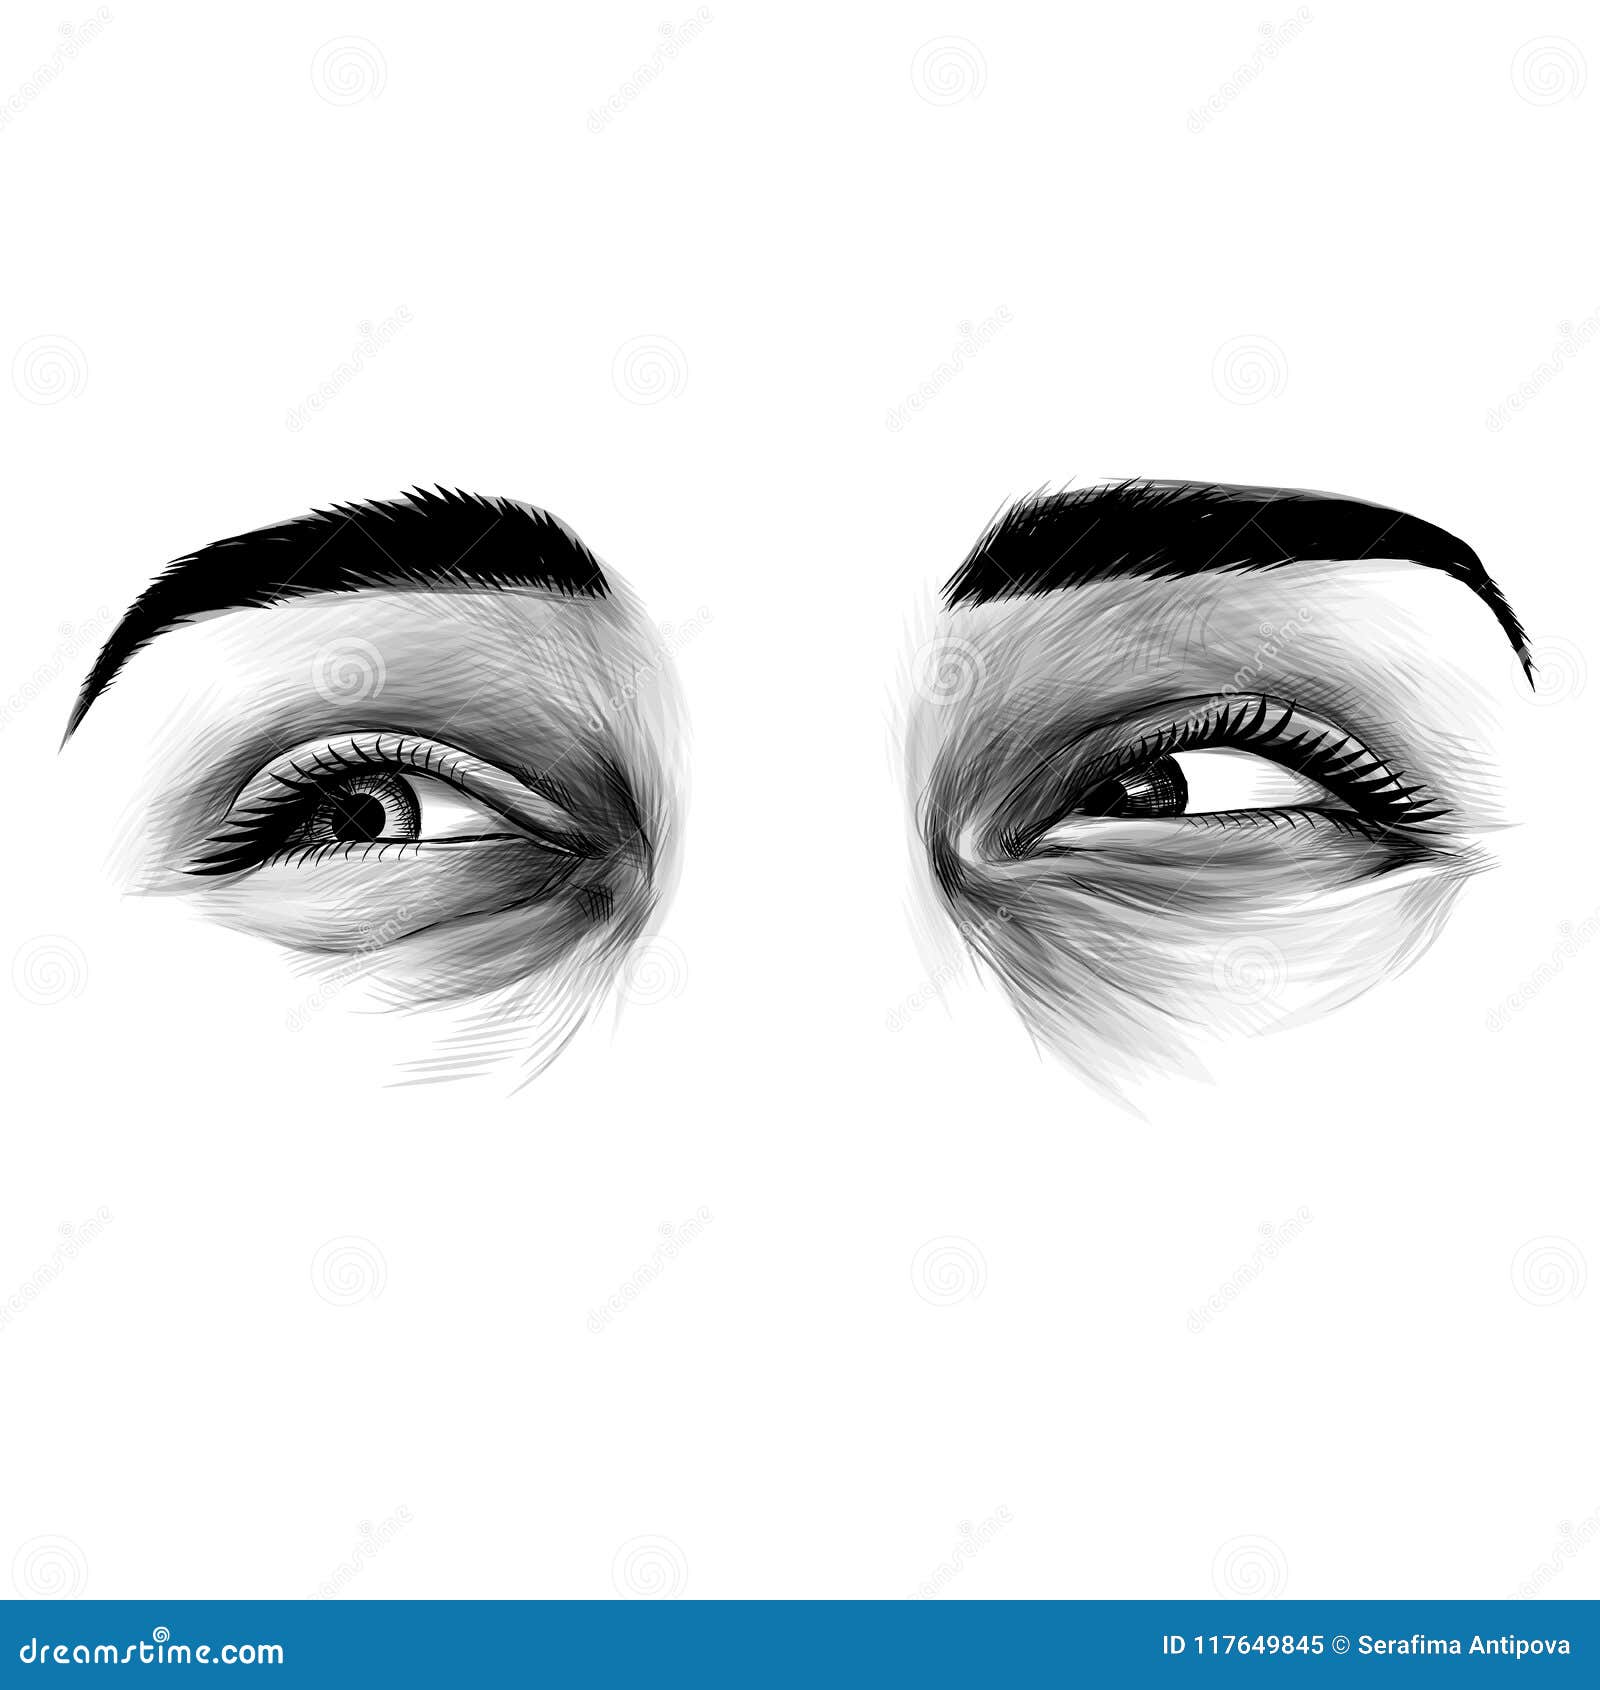 Female eyes by dasidaria-art on DeviantArt